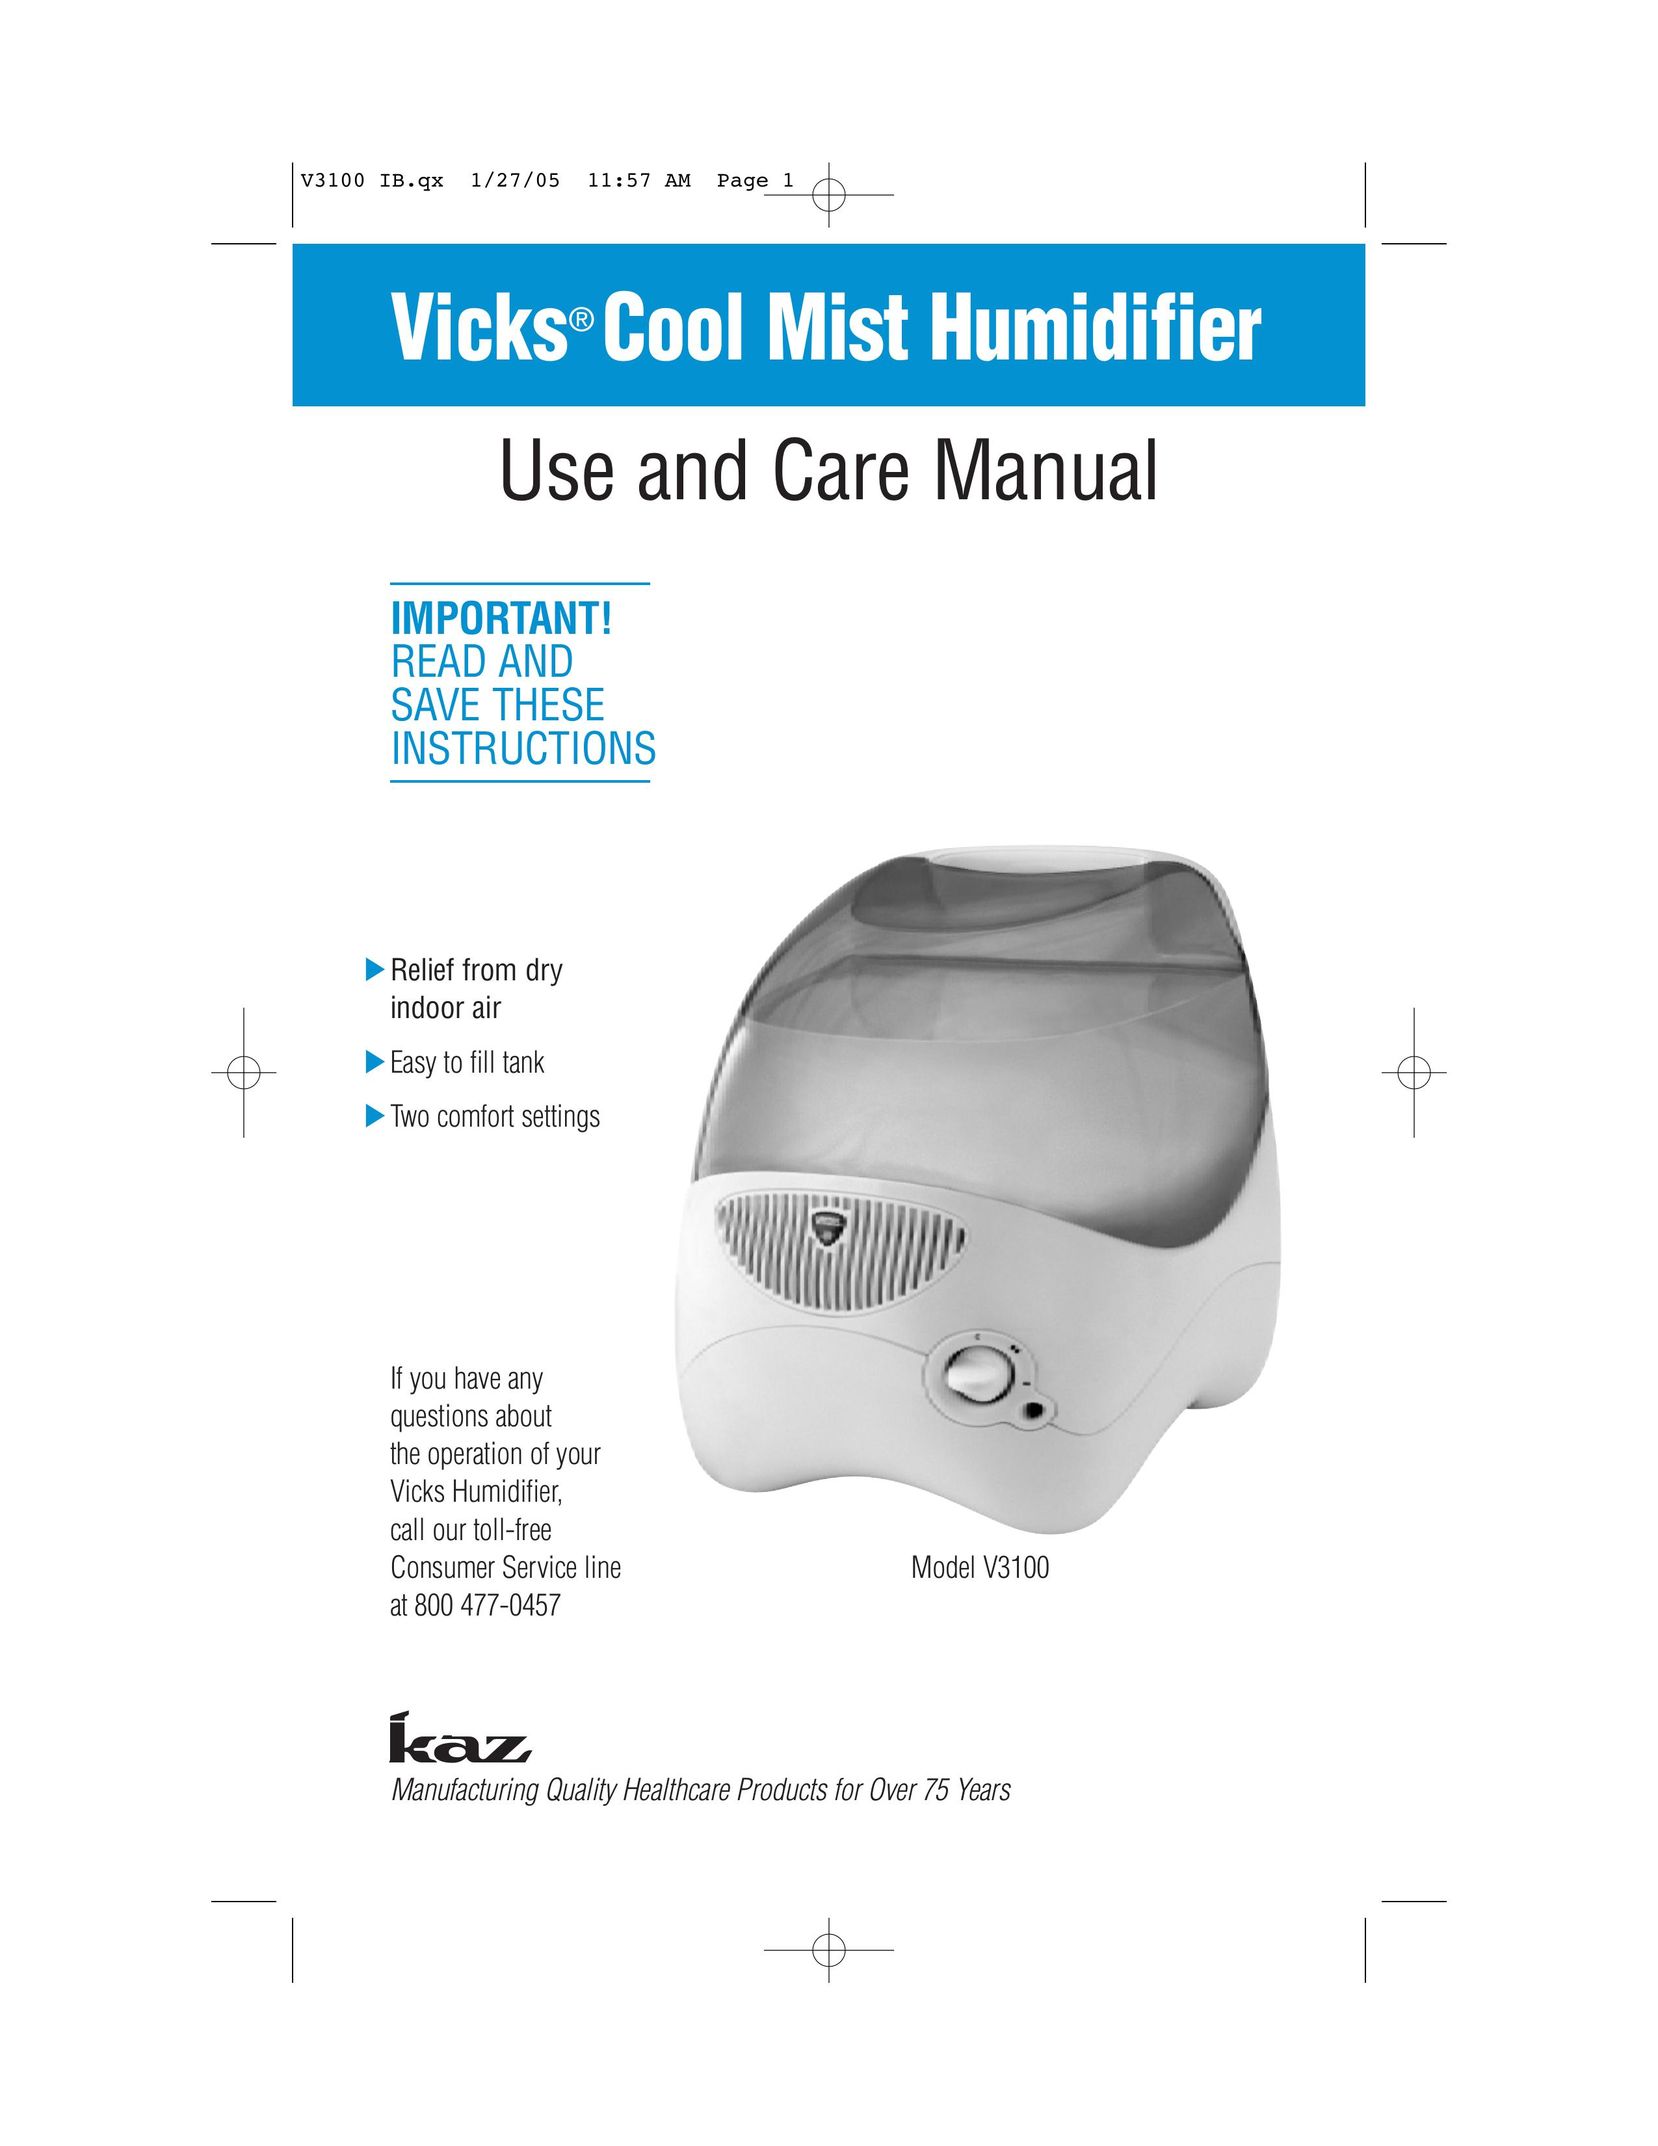 Vicks V3100 Humidifier User Manual